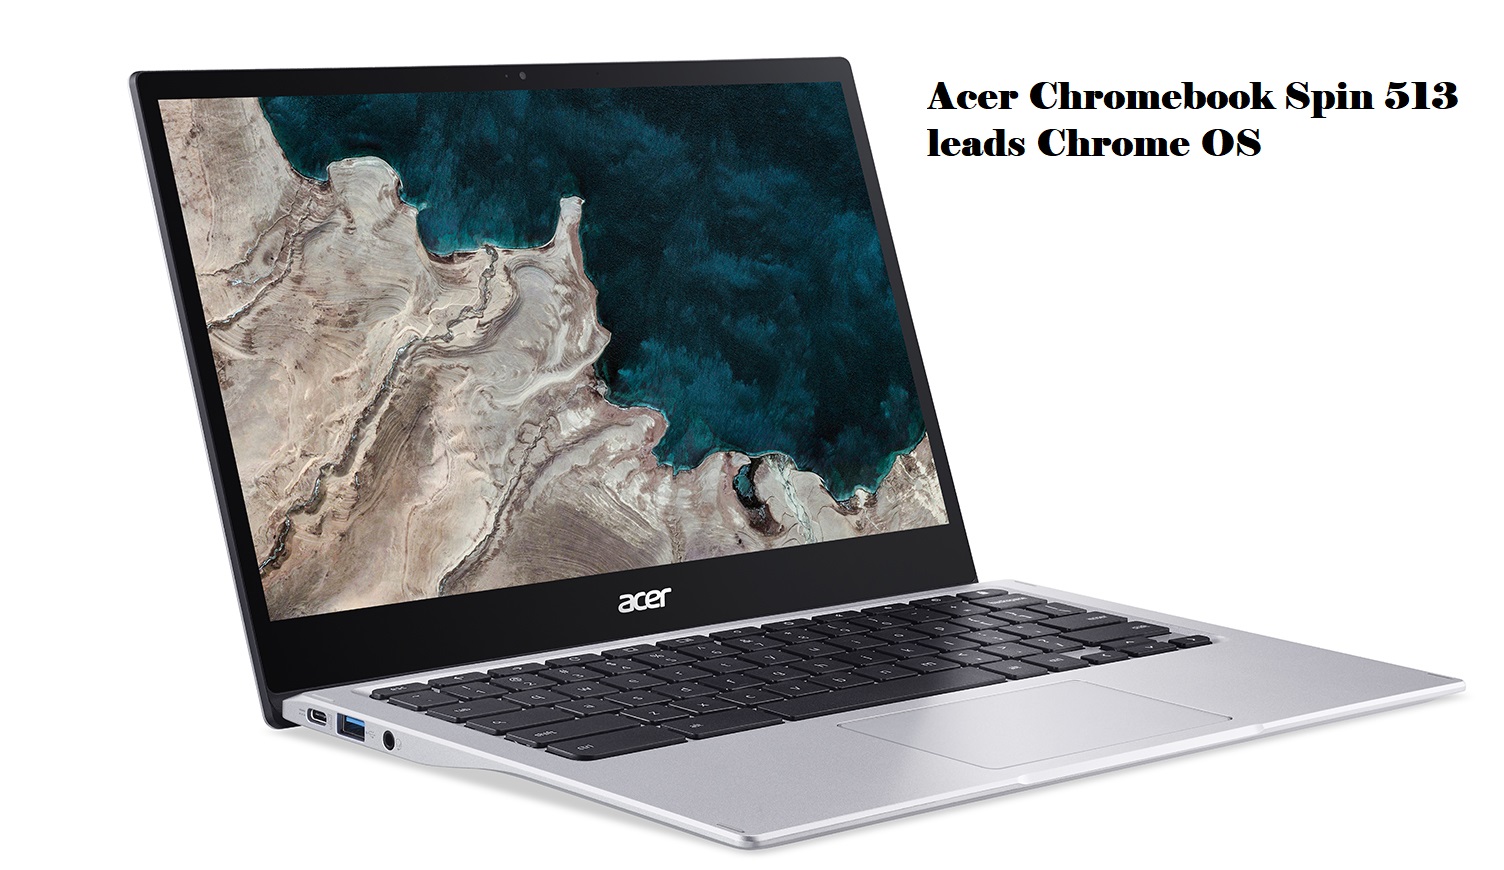 Acer Chromebook Spin 513 leads Chrome OS